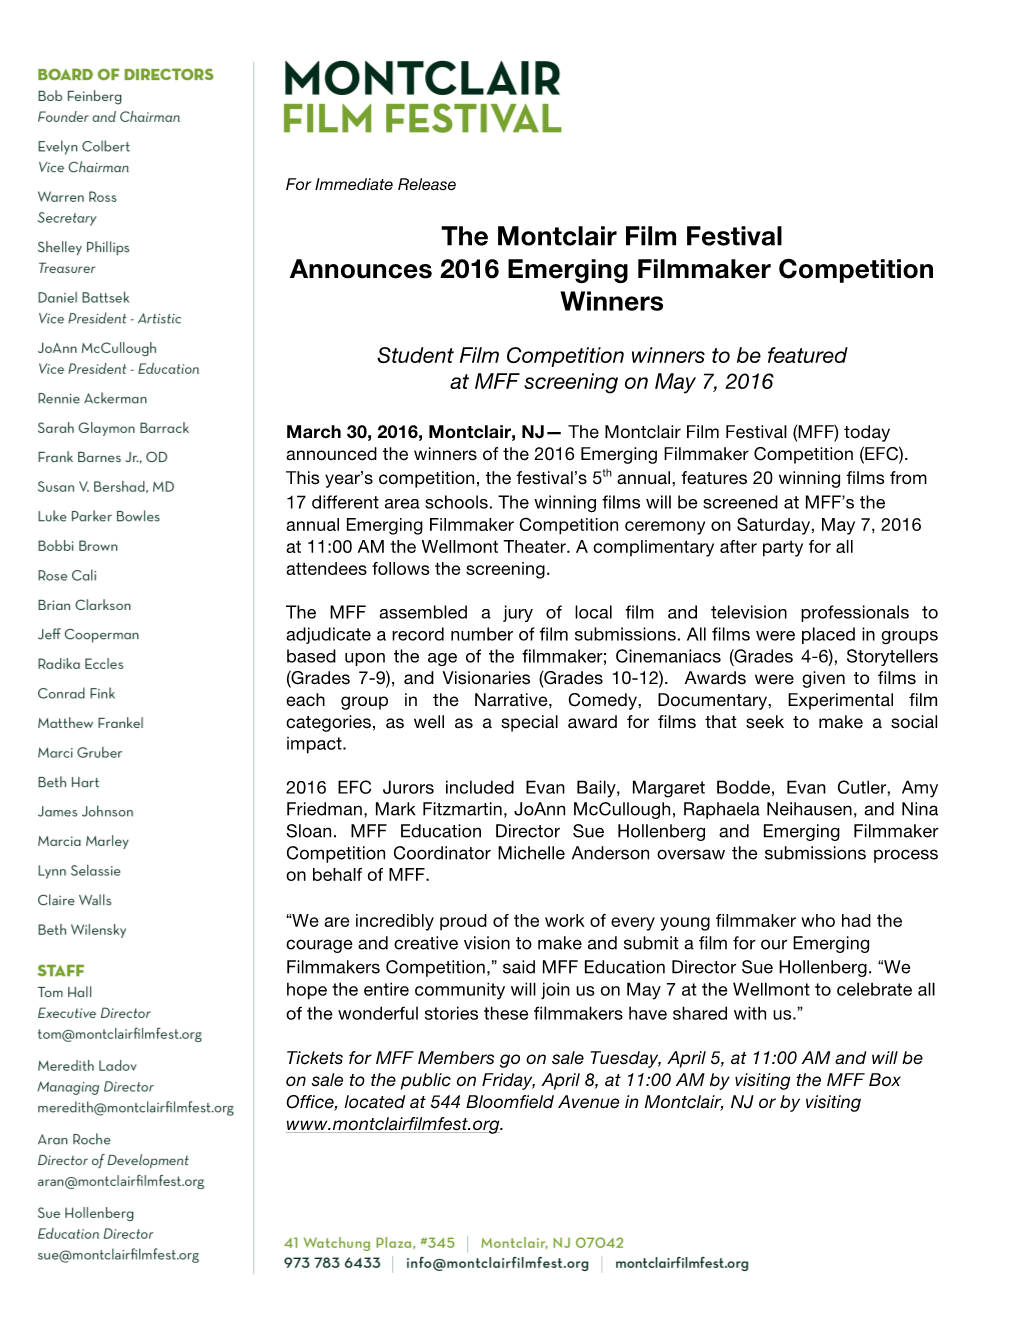 Montclair Film Festival Announces 2016 Emerging Filmmaker Competition Winners